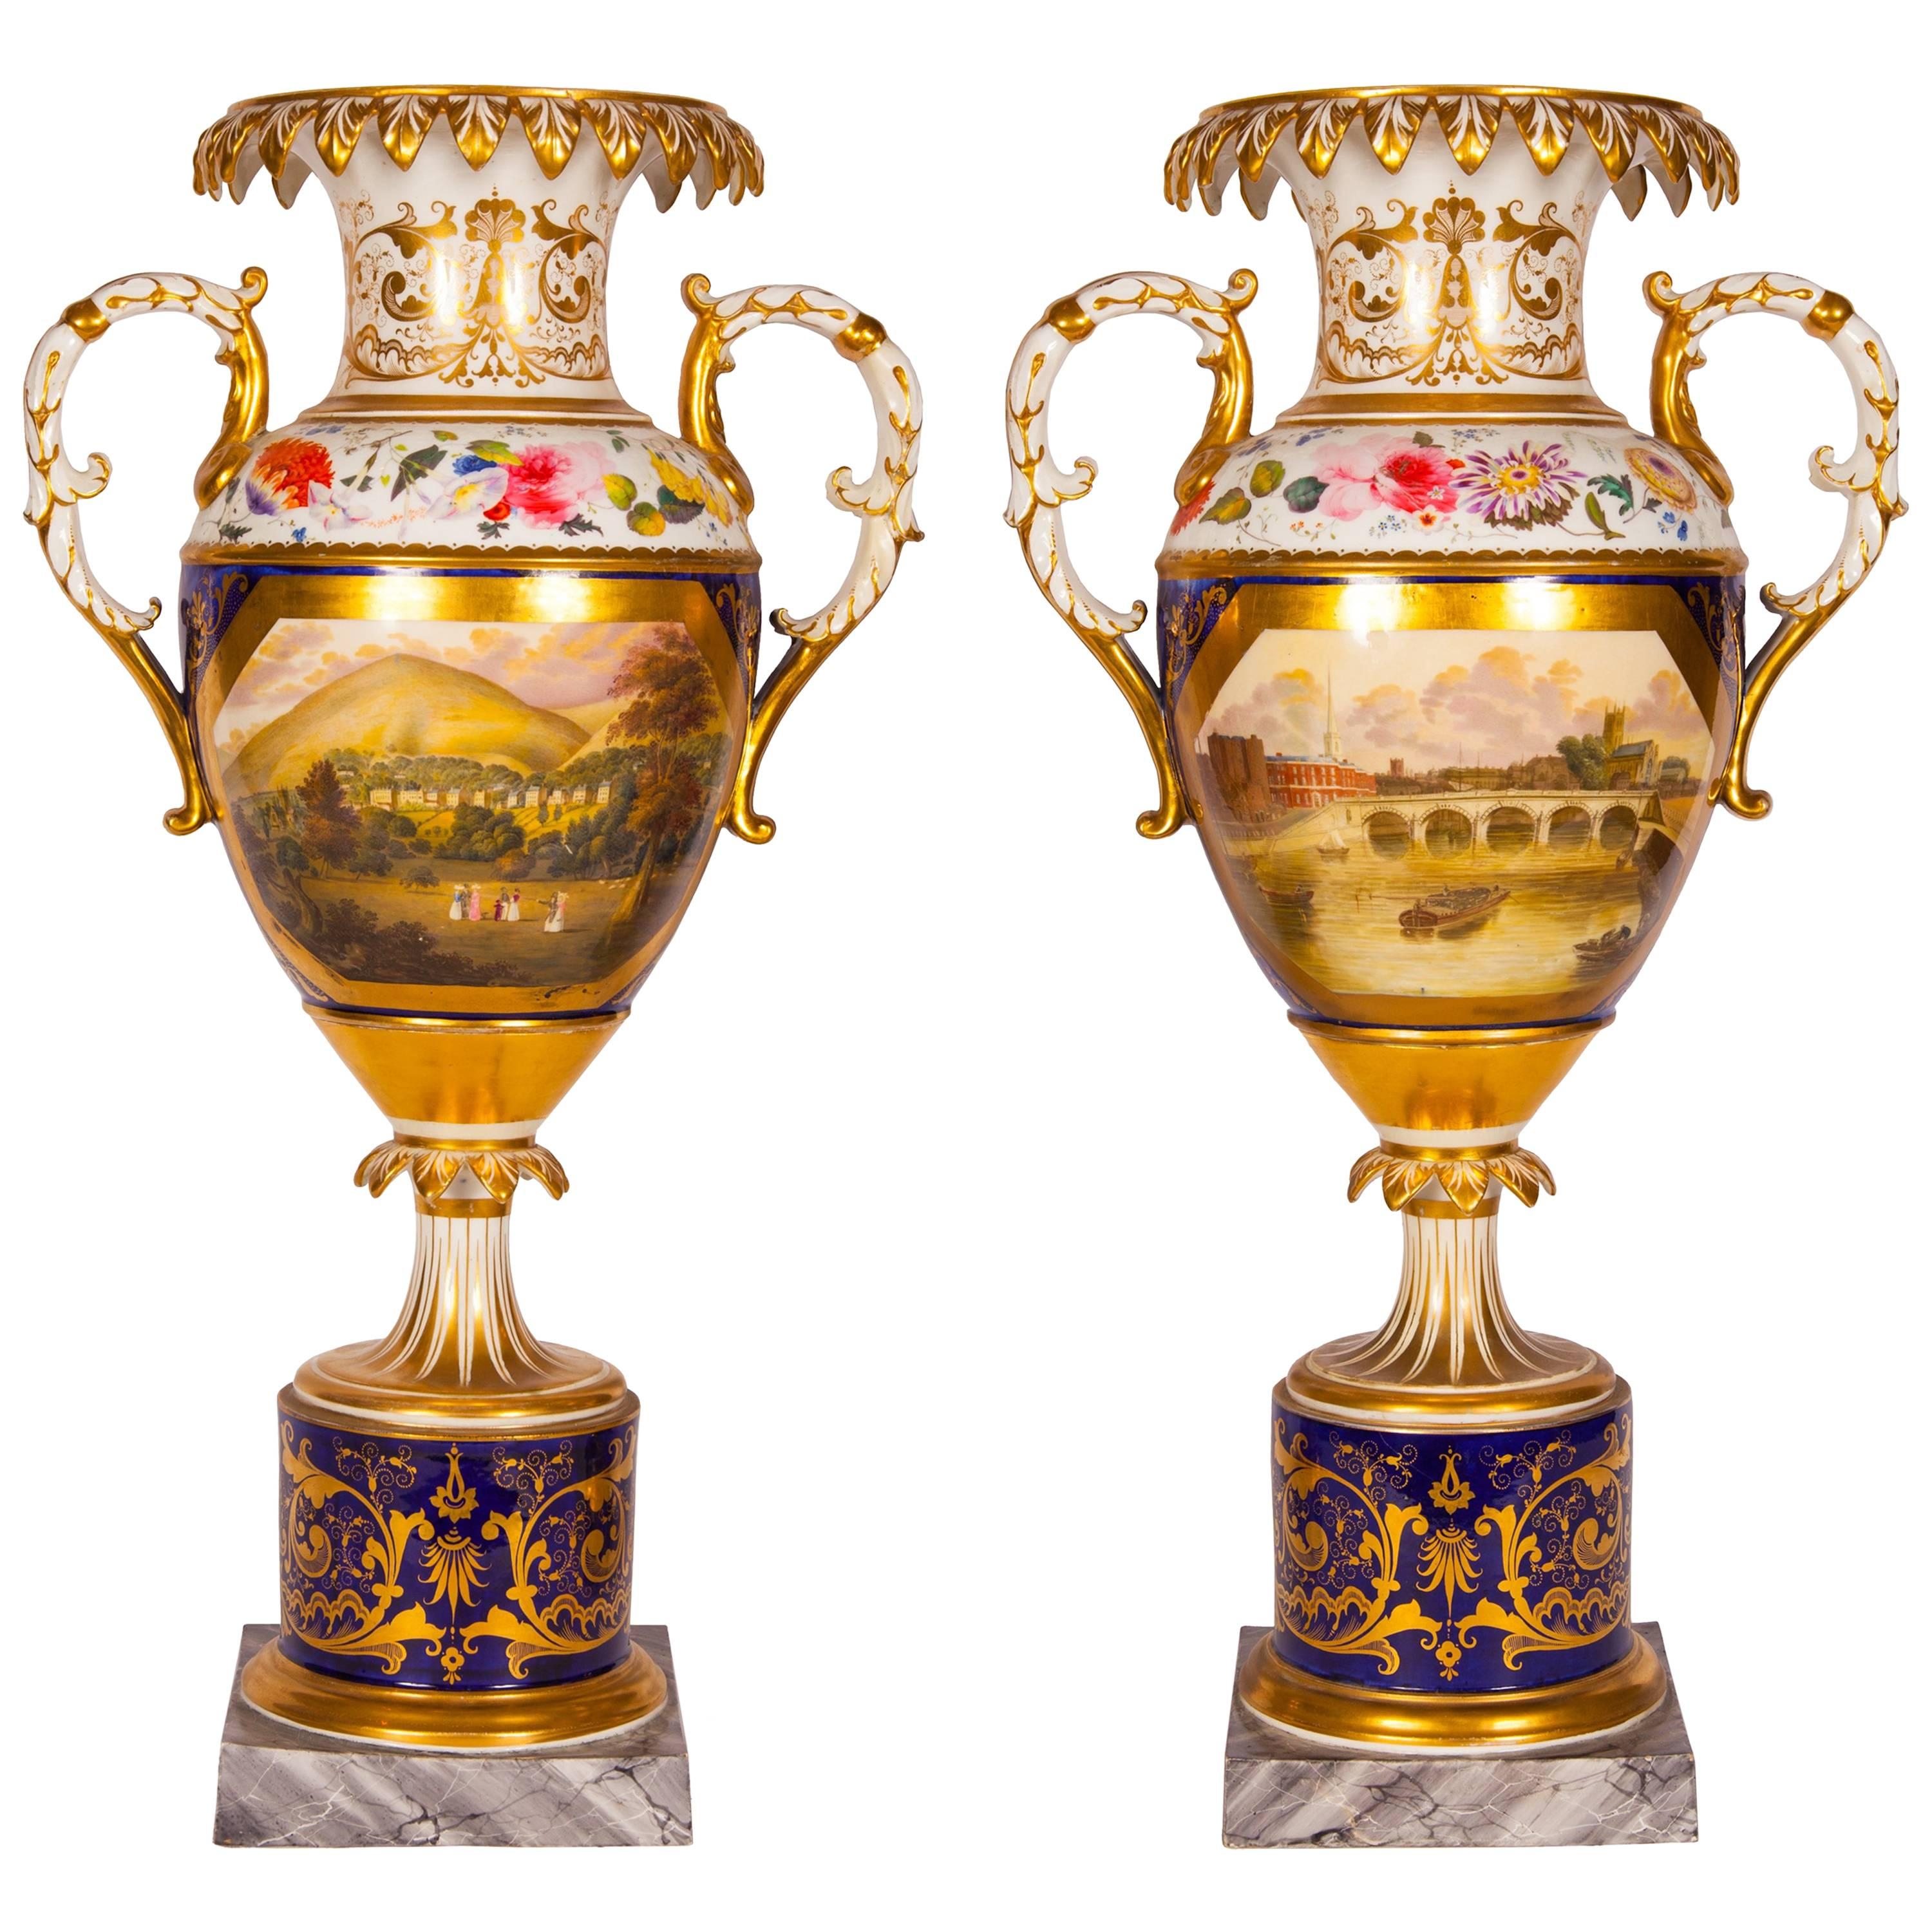 Antique Pair of Royal Worcester Porcelain and Gilt Urns